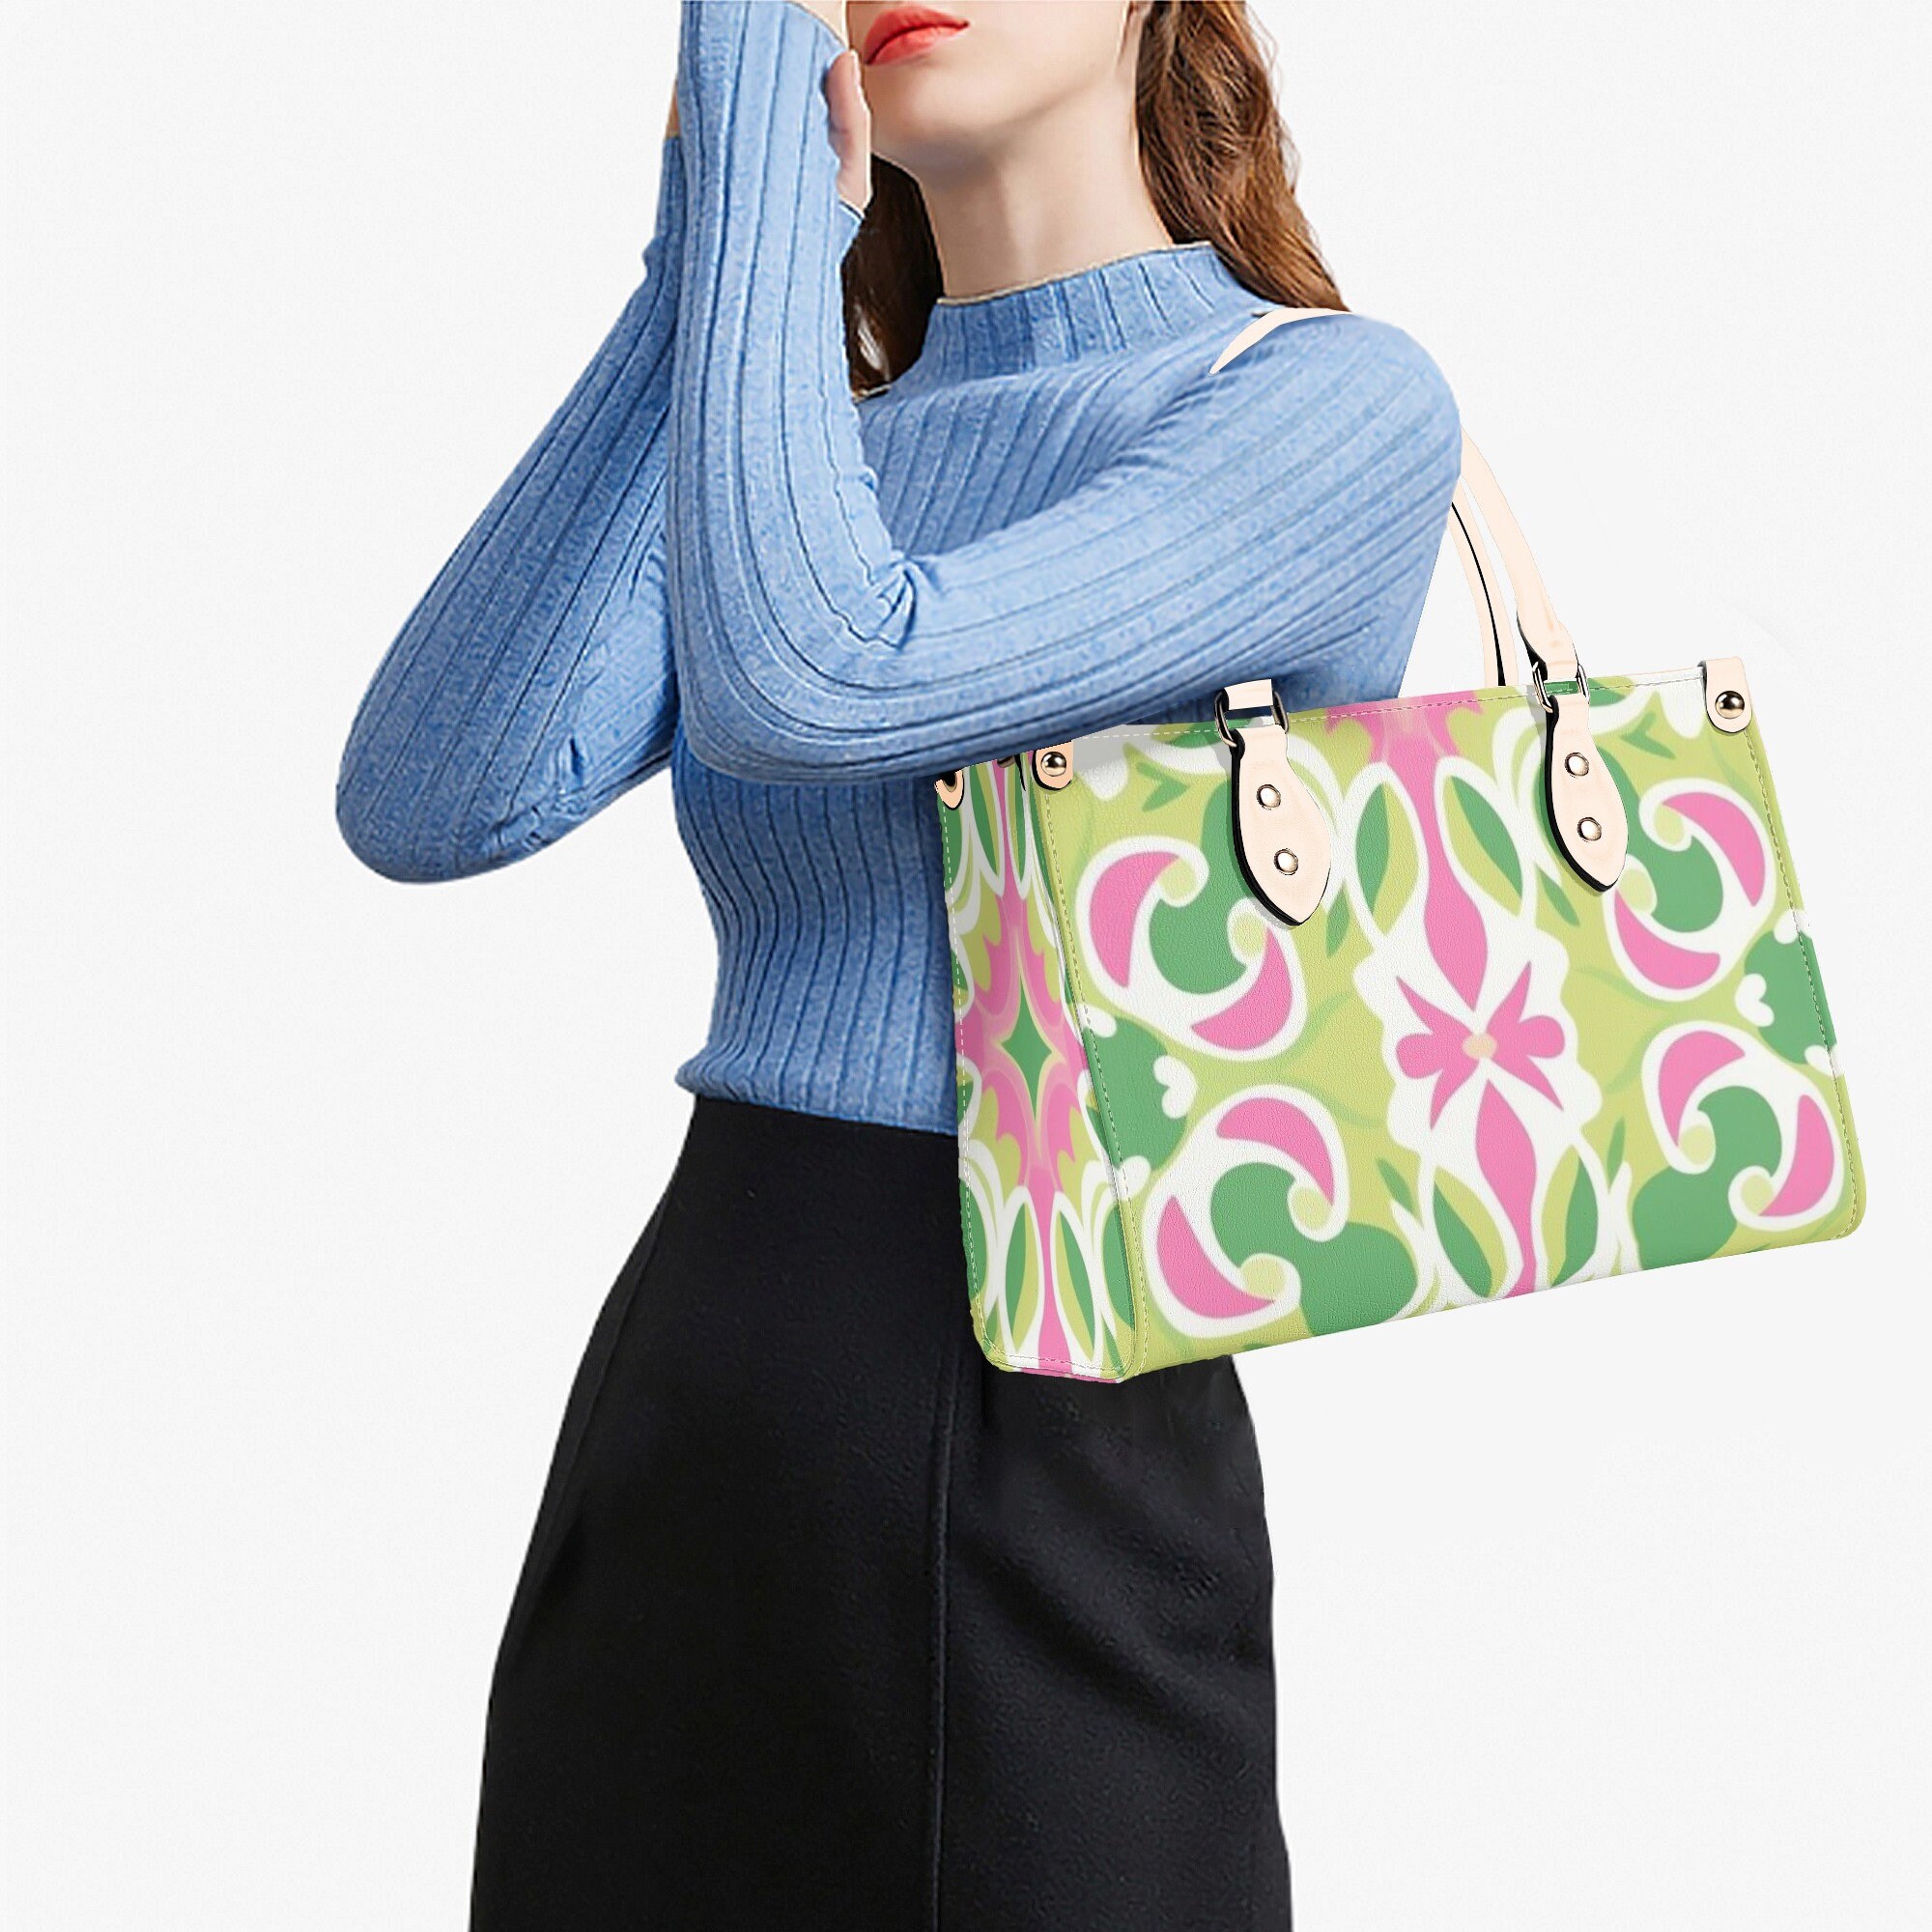 Leather Handbag beautiful design abstract art spring colors